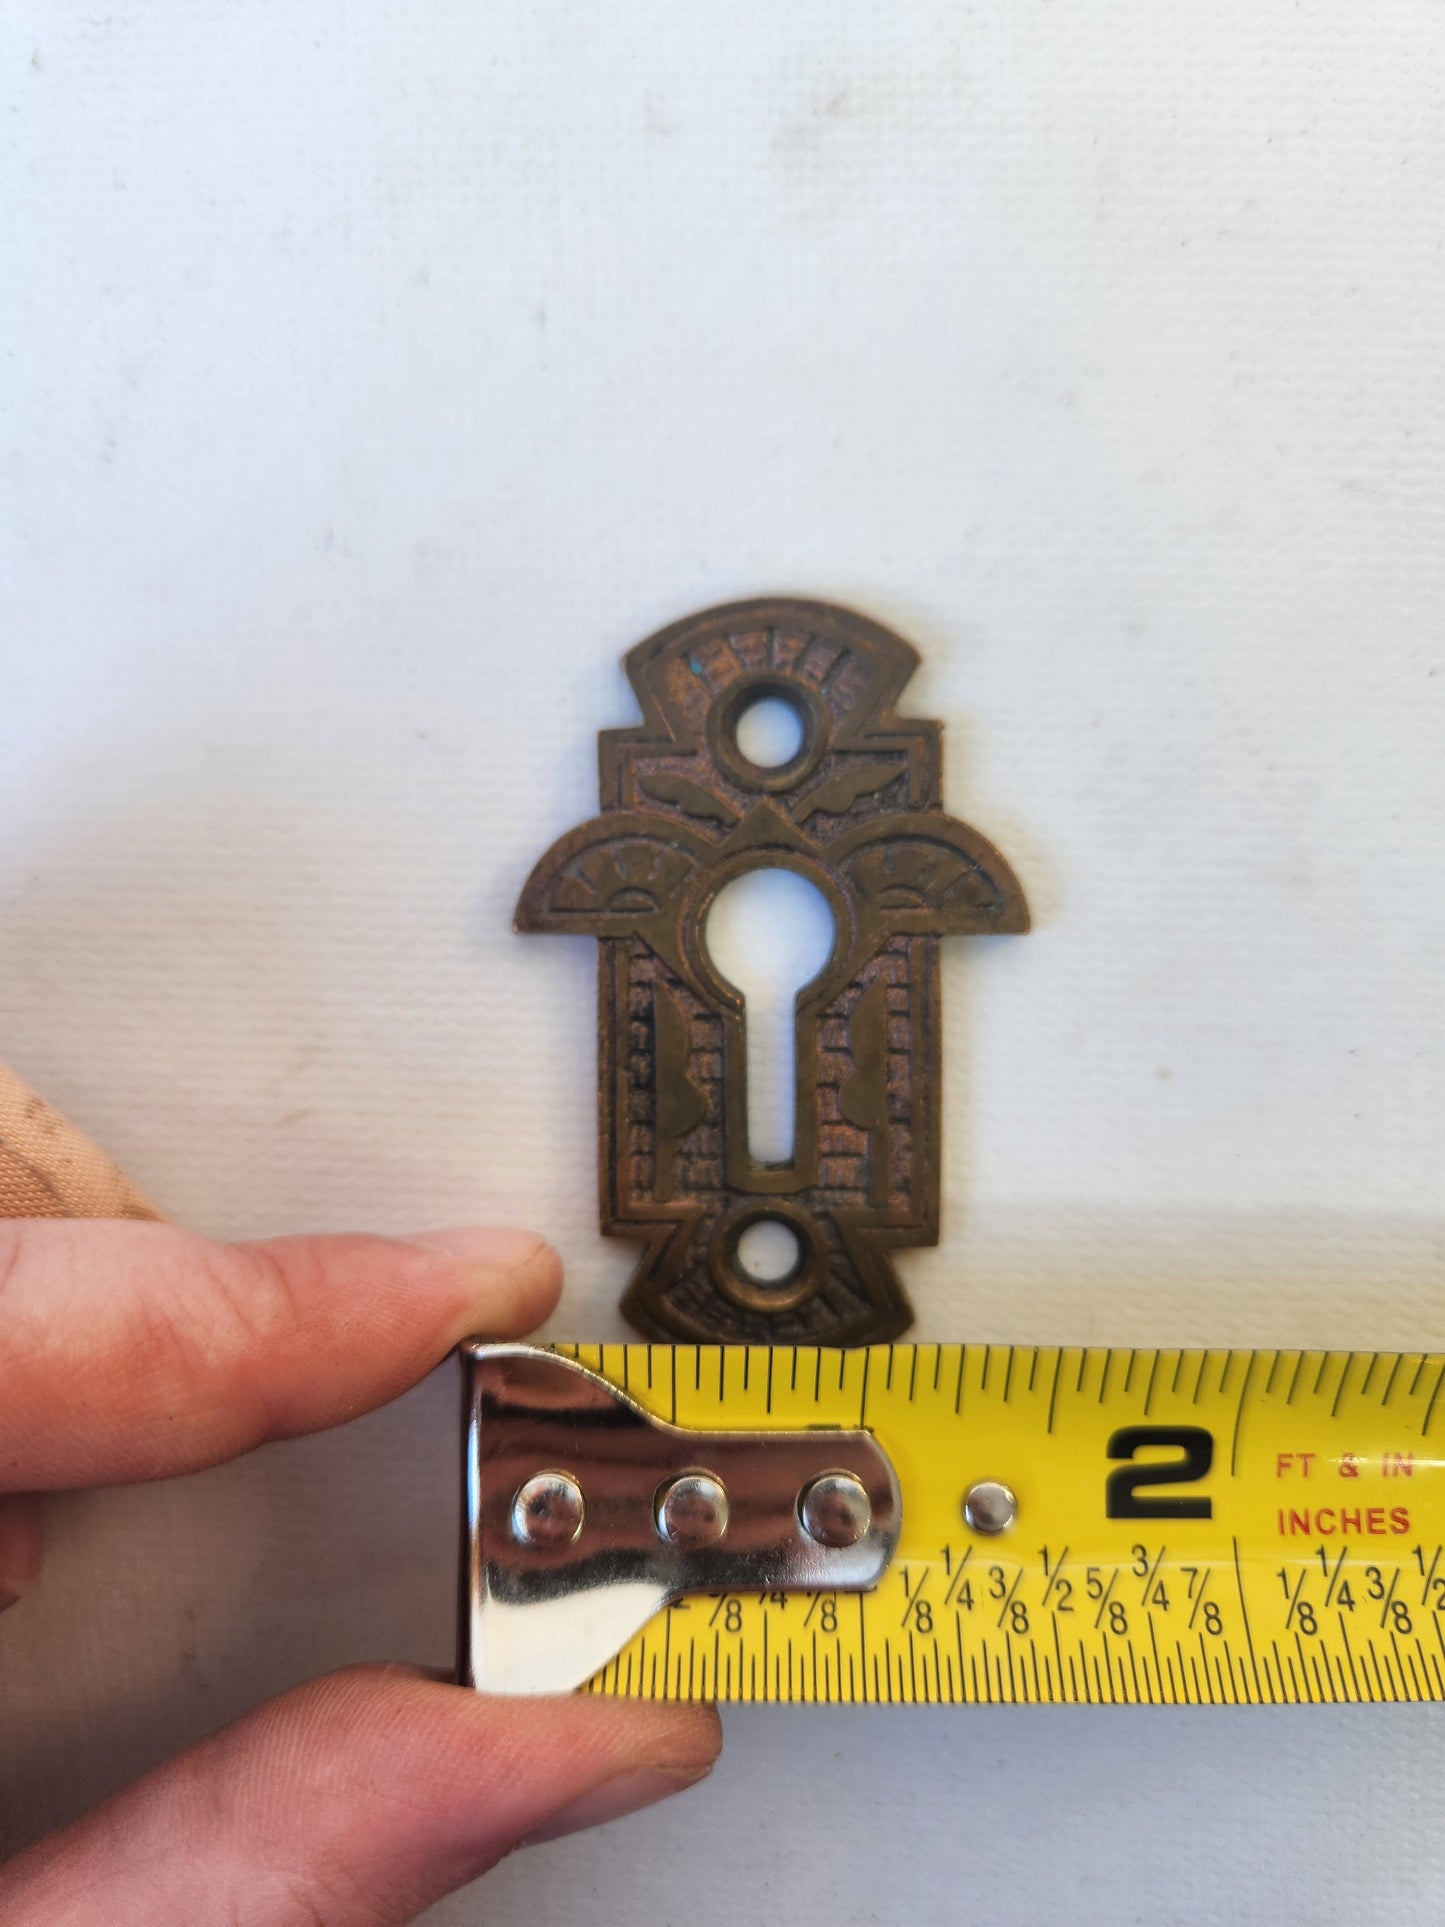 Two Antique Brass Keyhole Escutcheons, Brass Key Plates, Key Hole Covers 021704